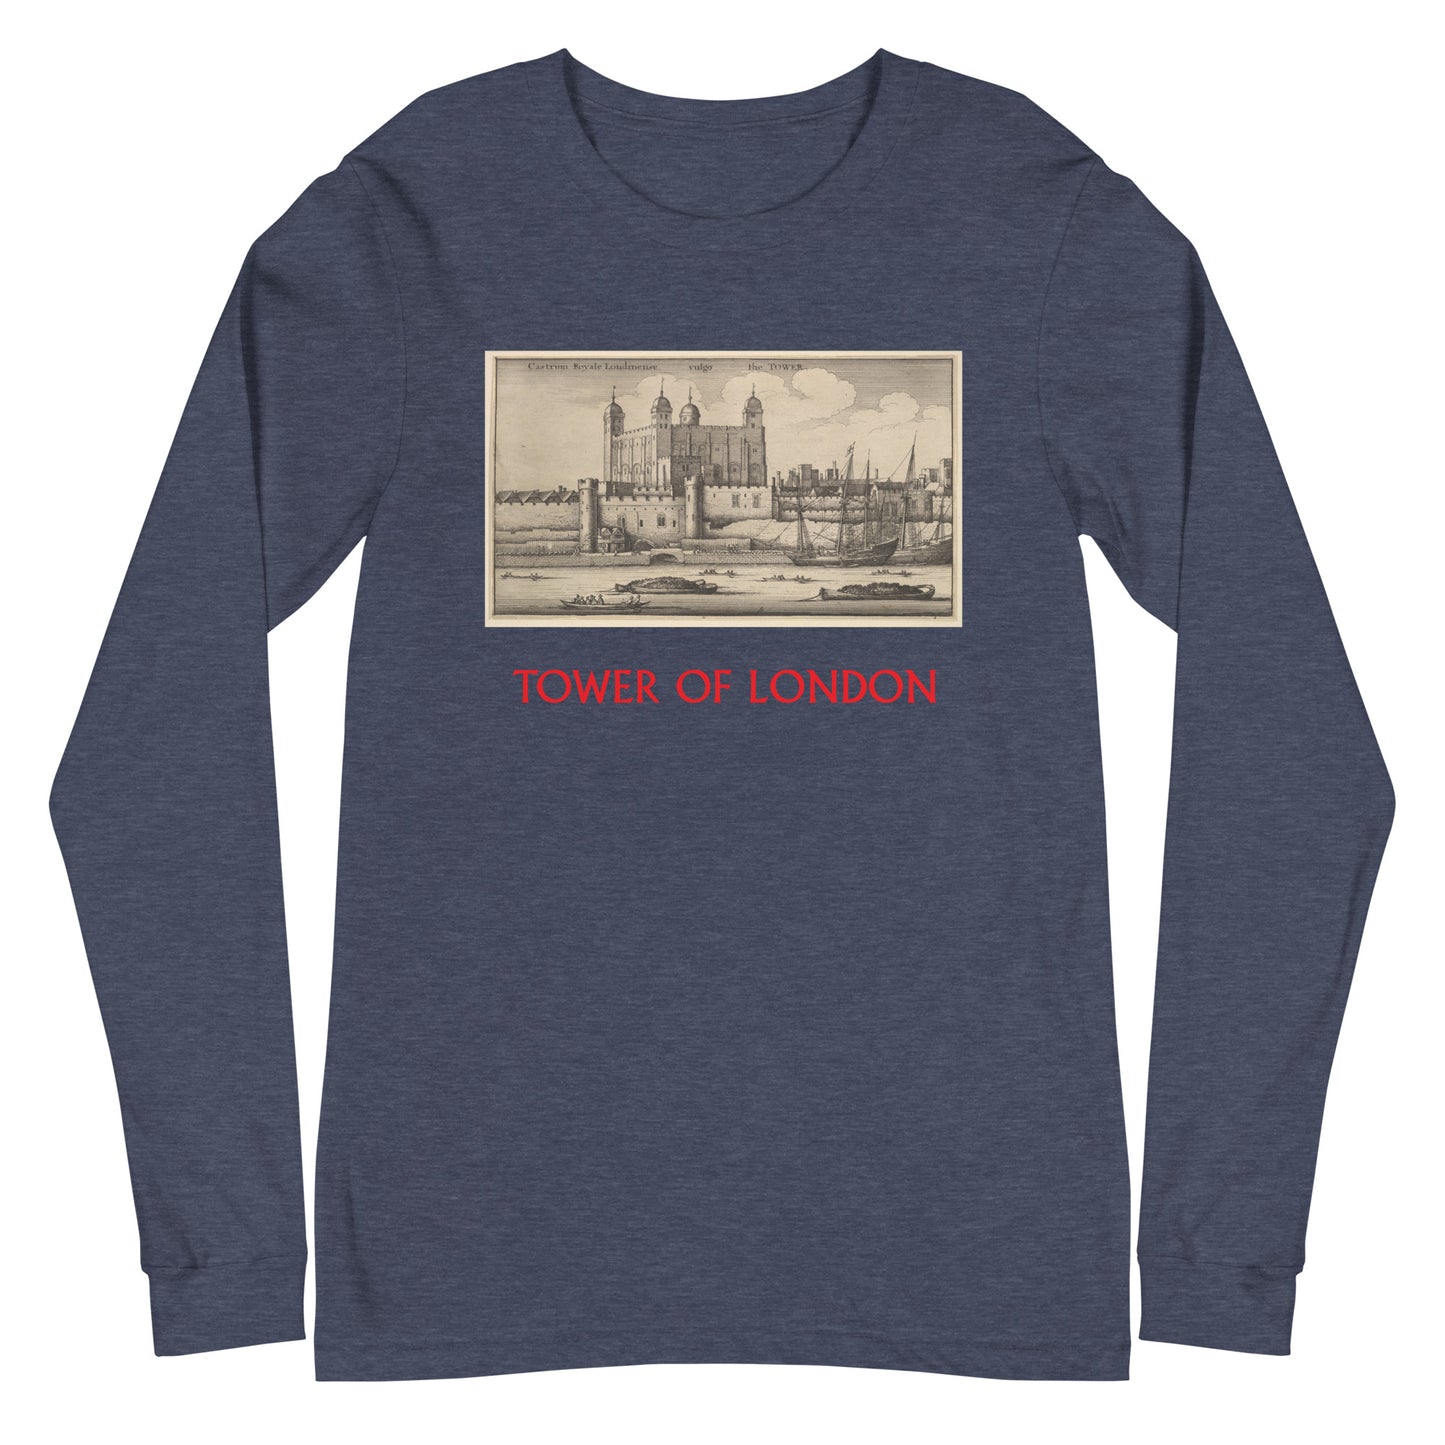 Tower of London unisex long-sleeve tee